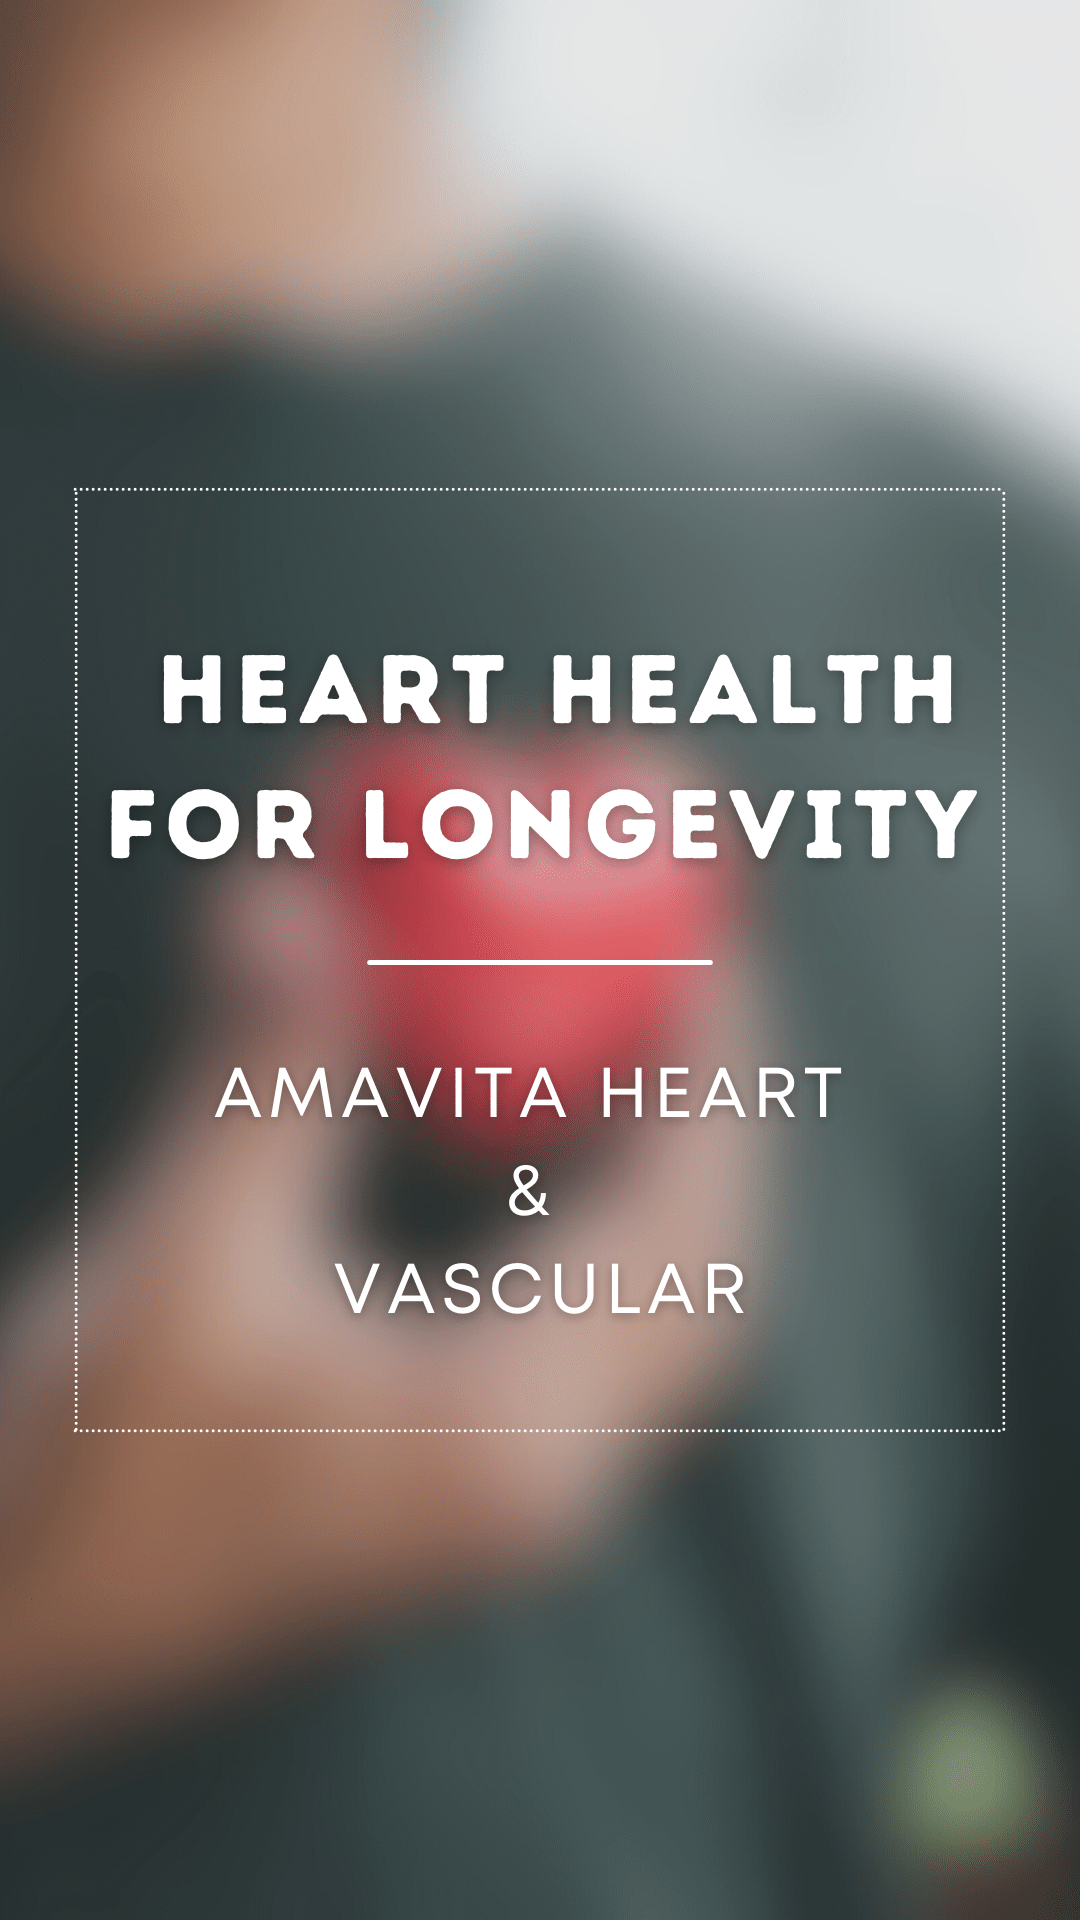 Steps to Improve Heart Health for Longevity